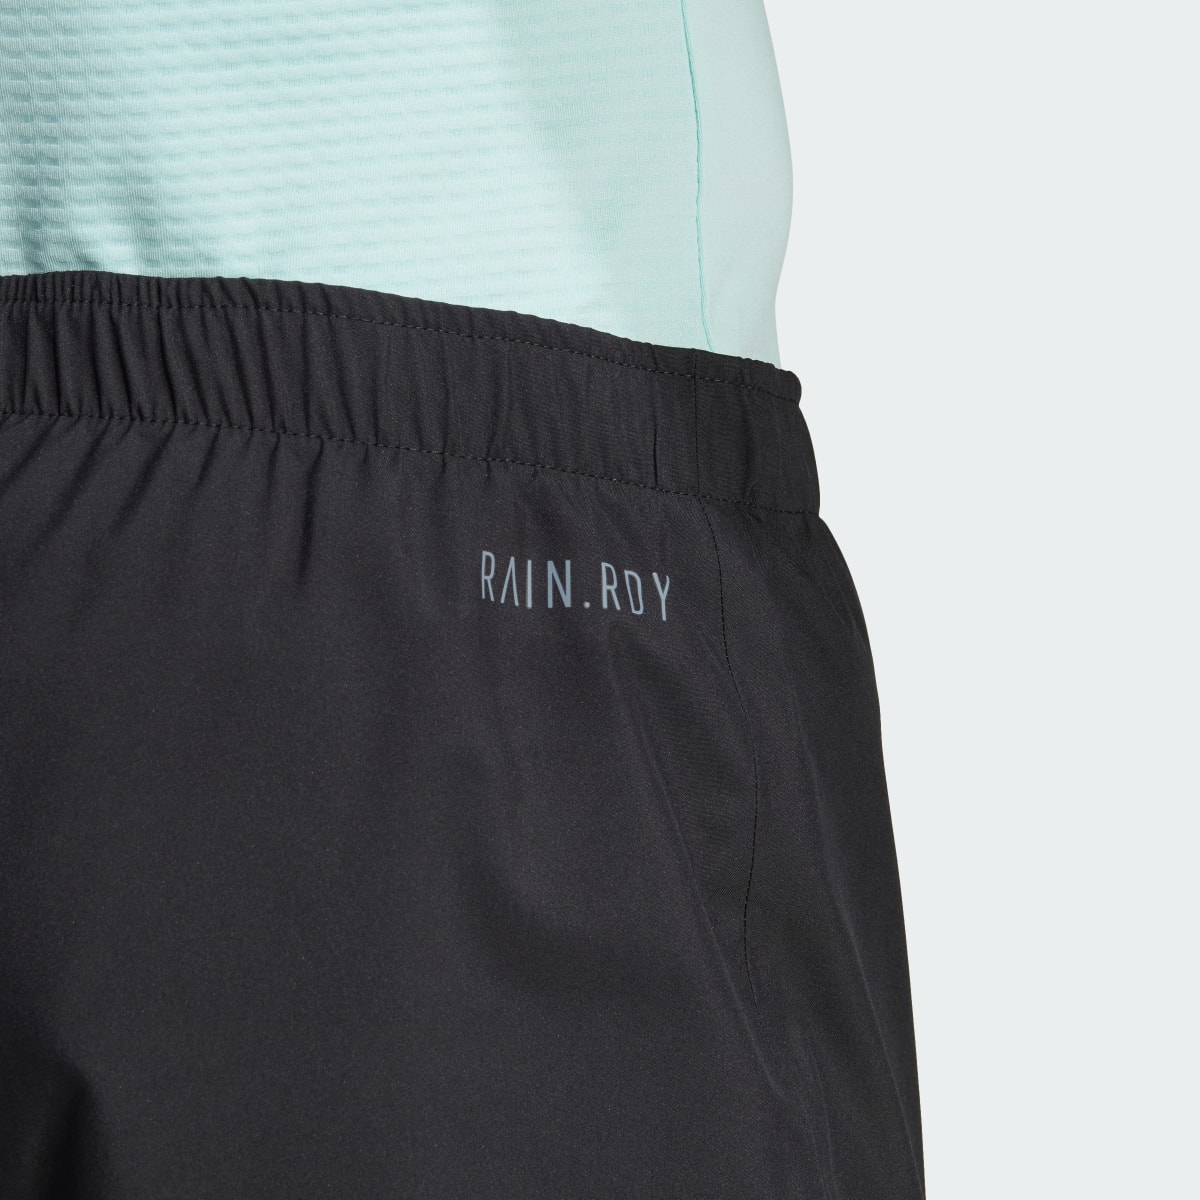 Adidas Pants para Lluvia Terrex Multi RAIN.RDY 2 Capas. 8